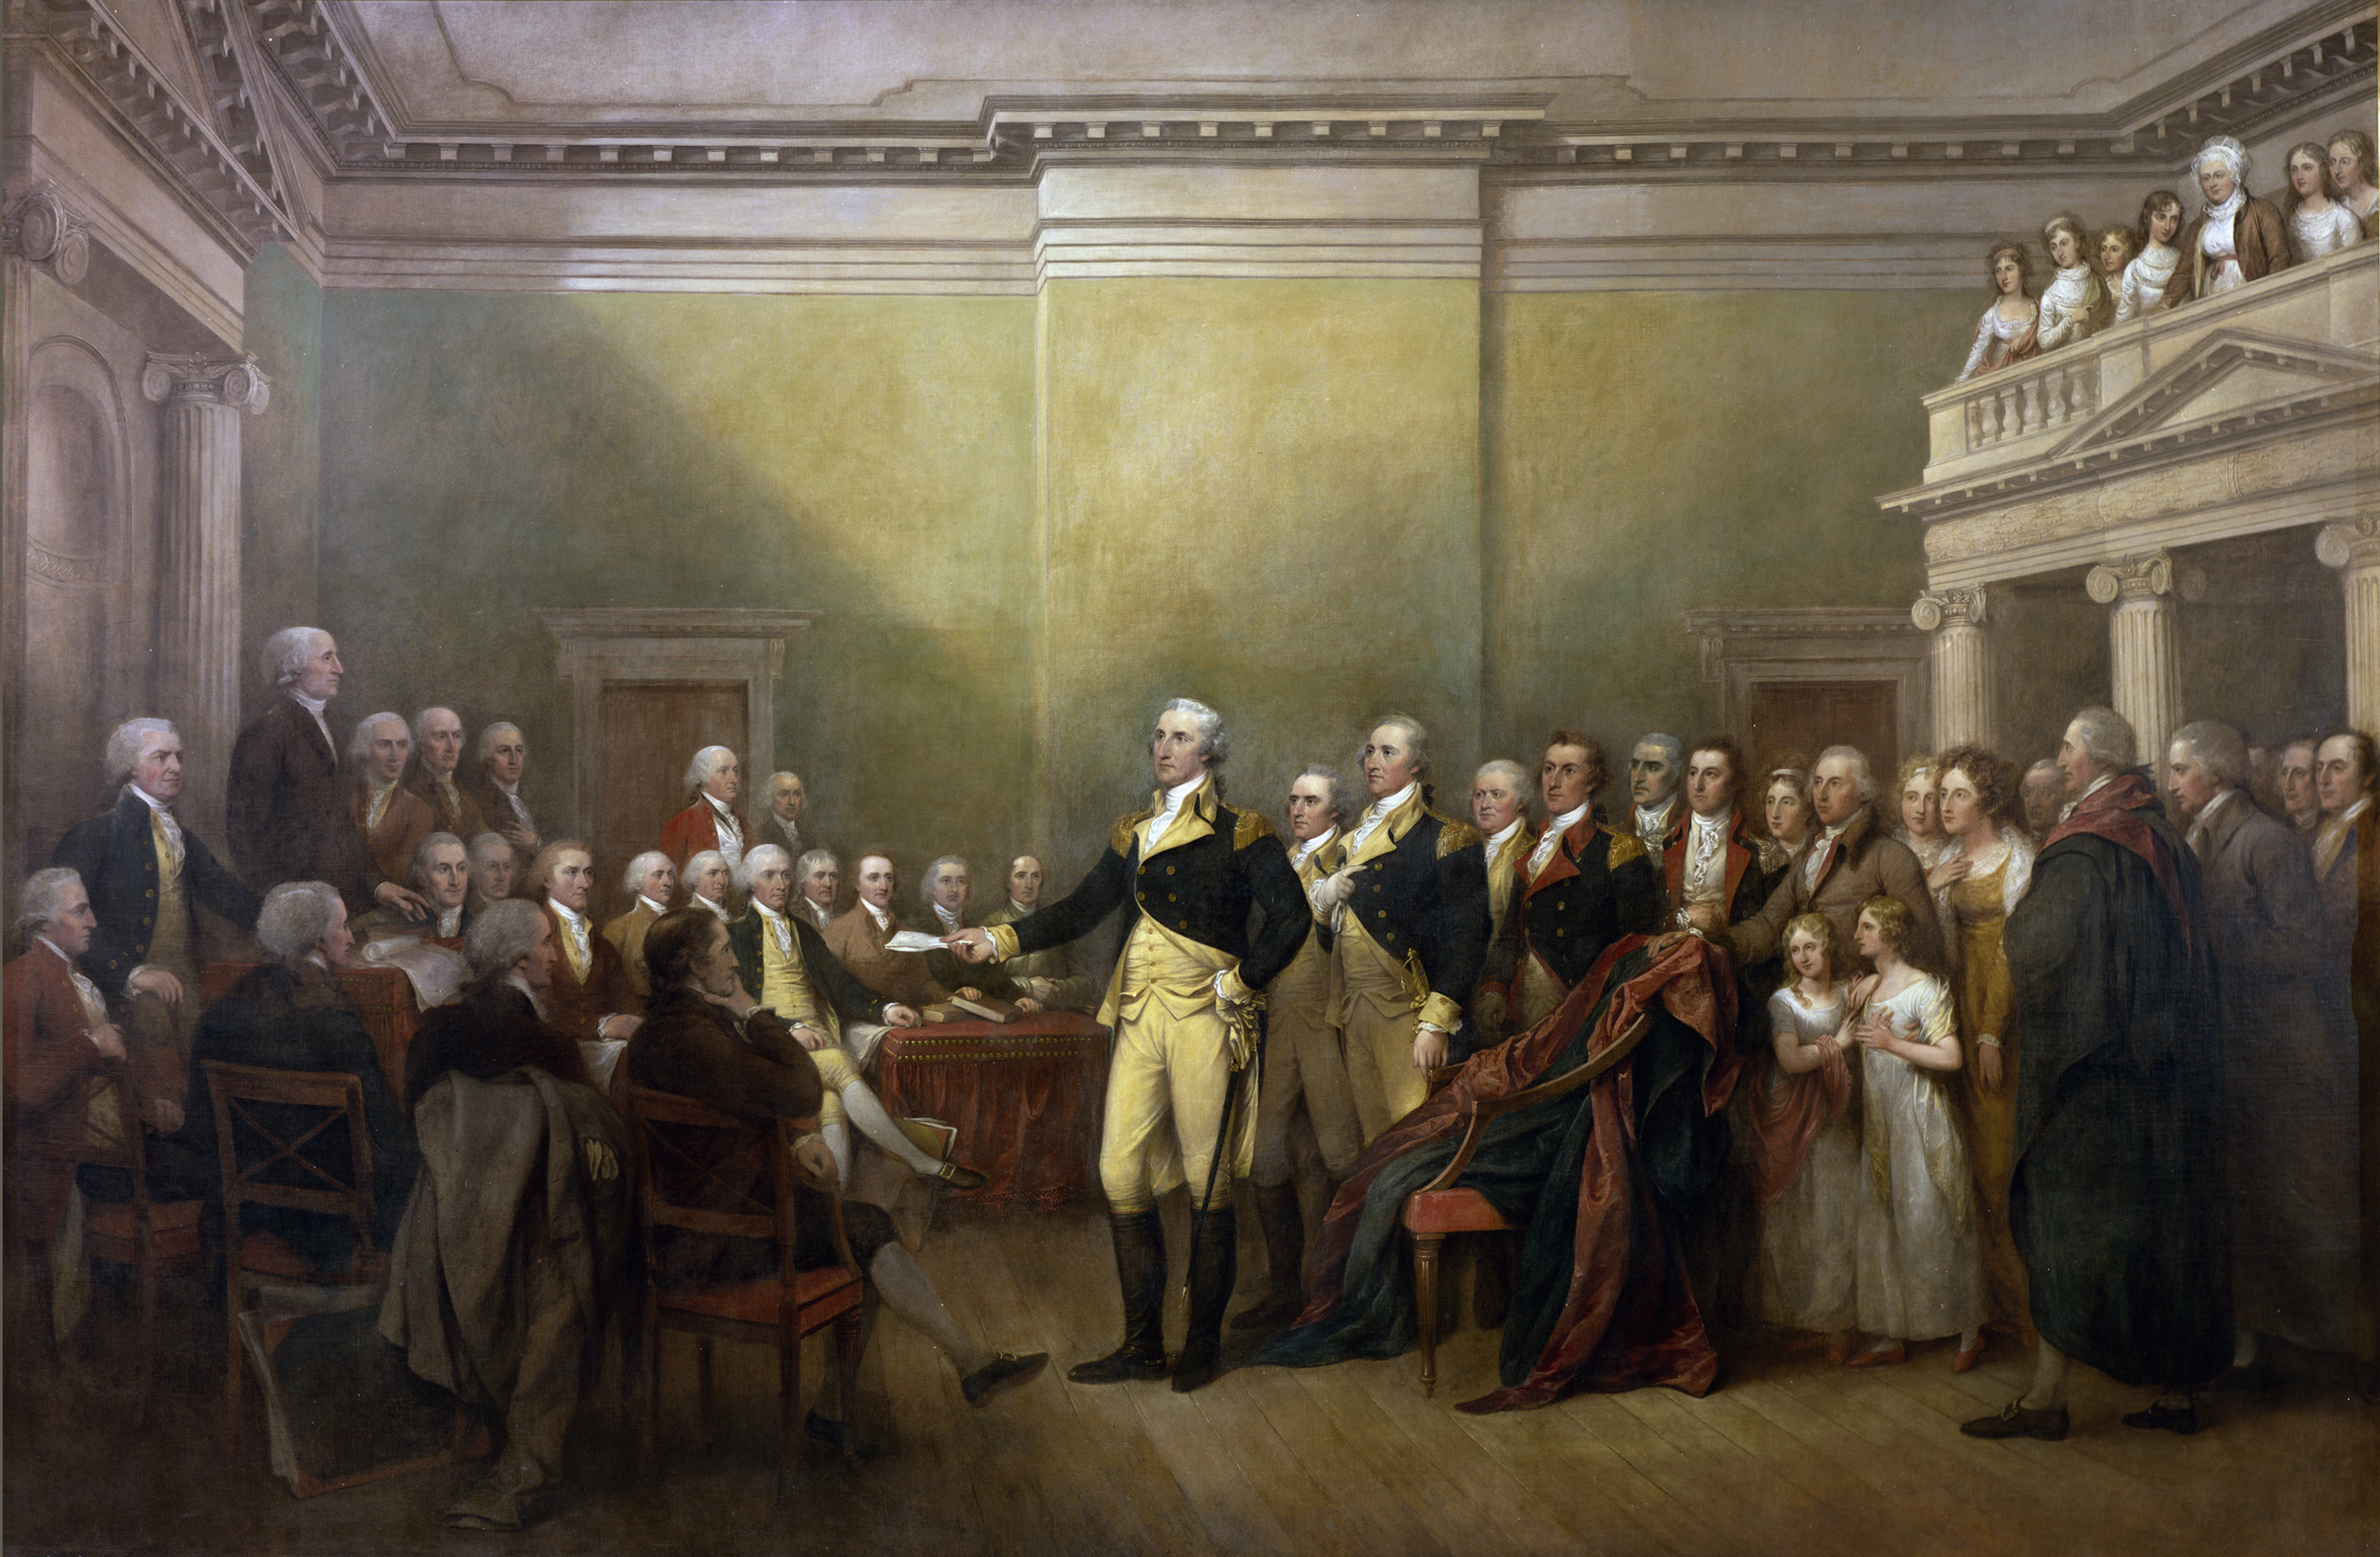 https://upload.wikimedia.org/wikipedia/commons/7/75/General_George_Washington_Resigning_his_Commission.jpg